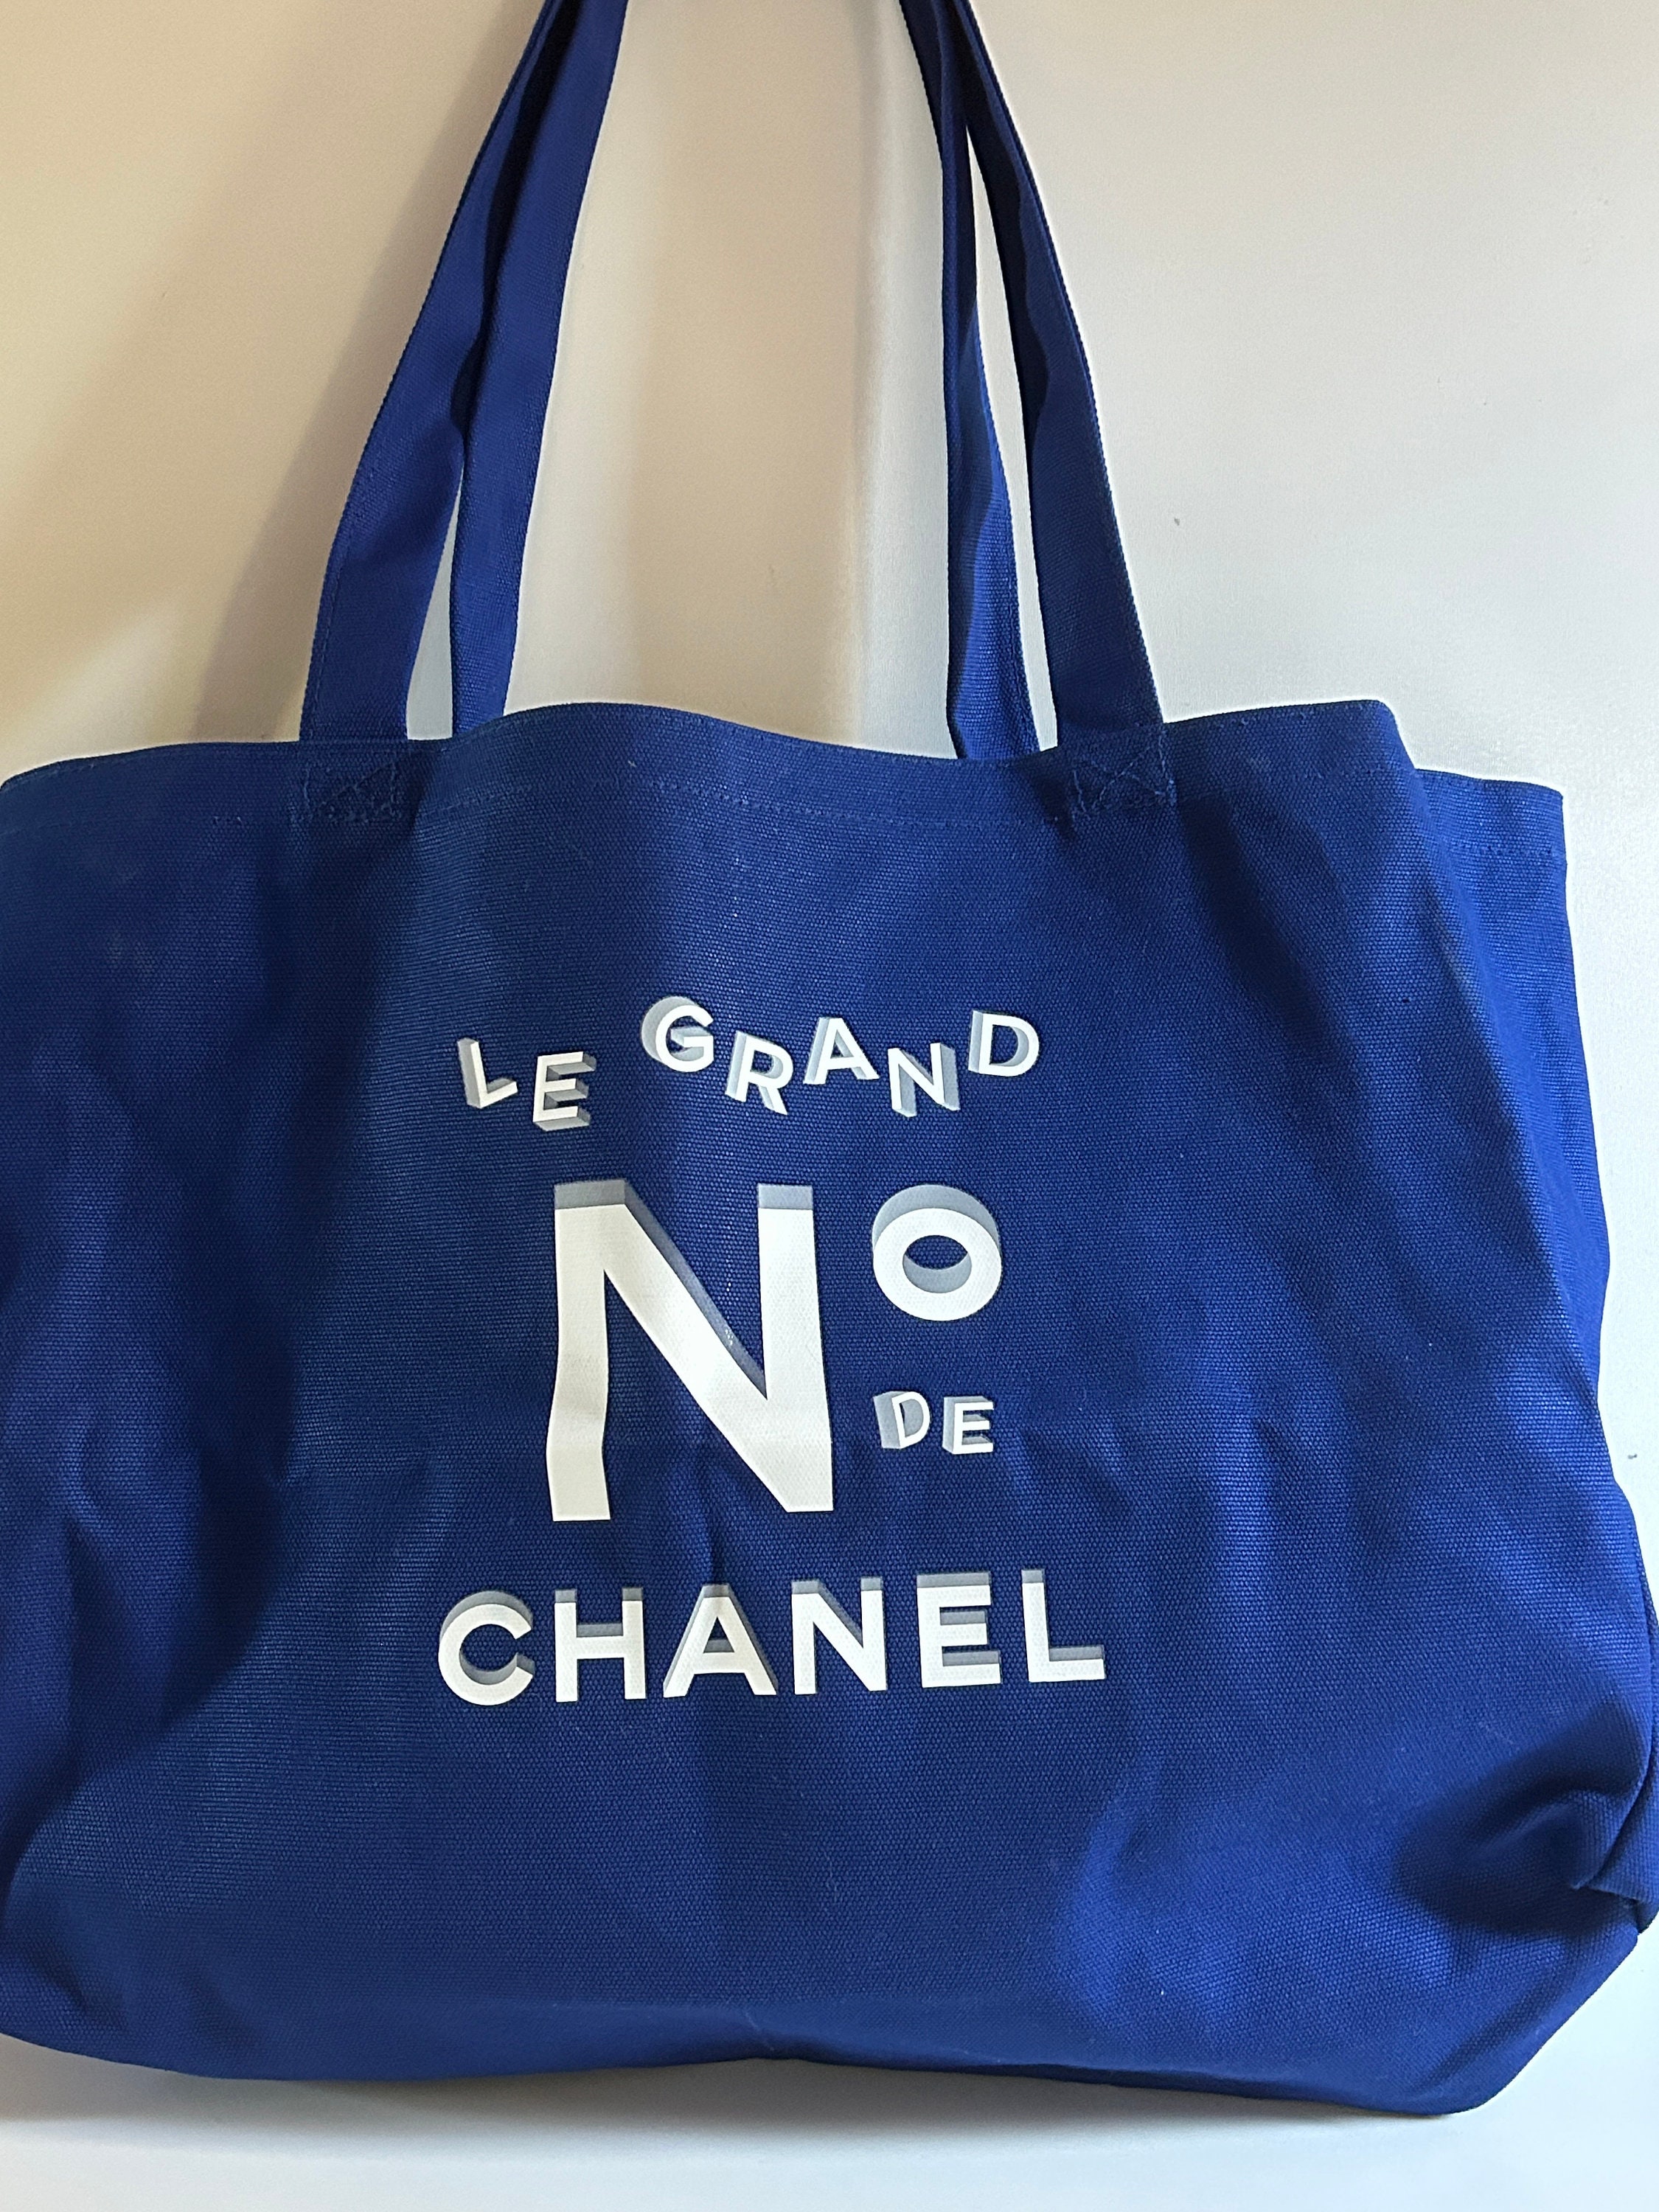 Chanel Vip Gift Bag - 60+ Gift Ideas for 2023